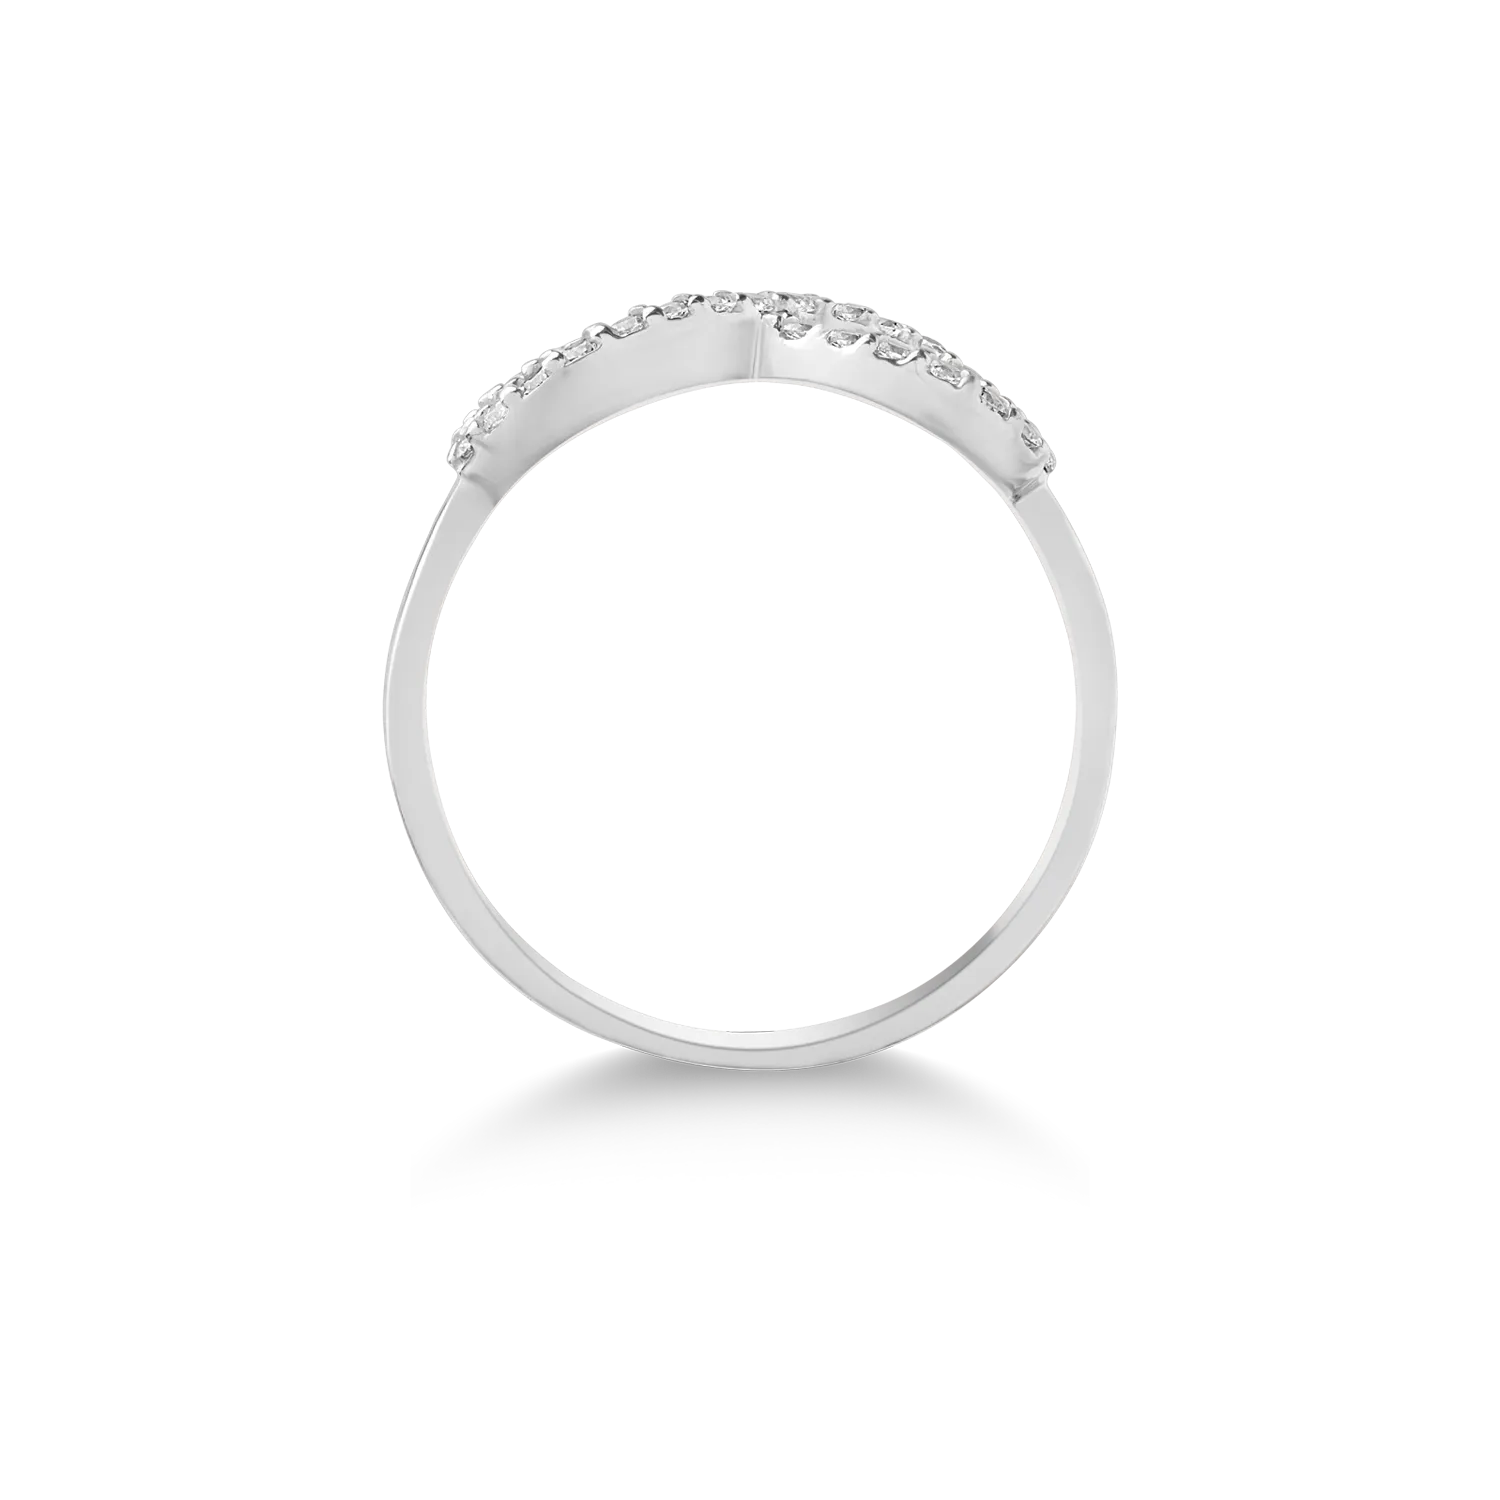 White gold infinity ring with microsetting zirconia